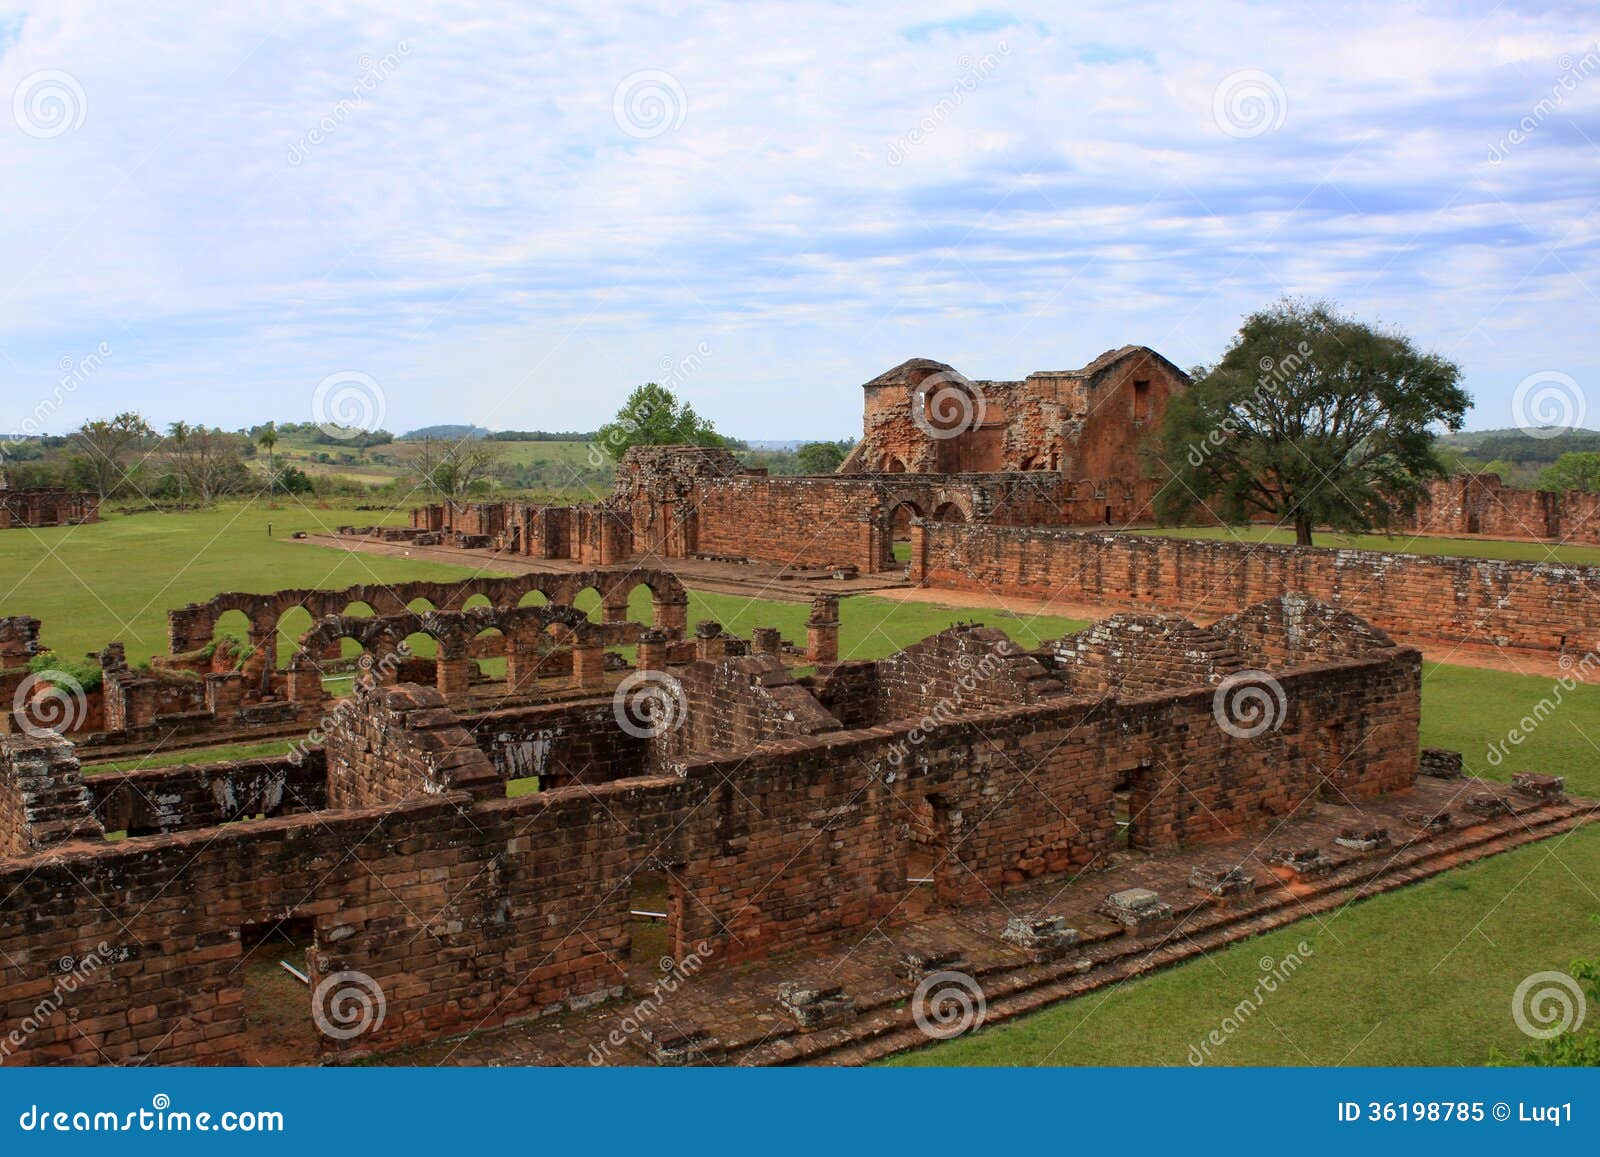 jesuit mission ruins in trinidad, paraguay